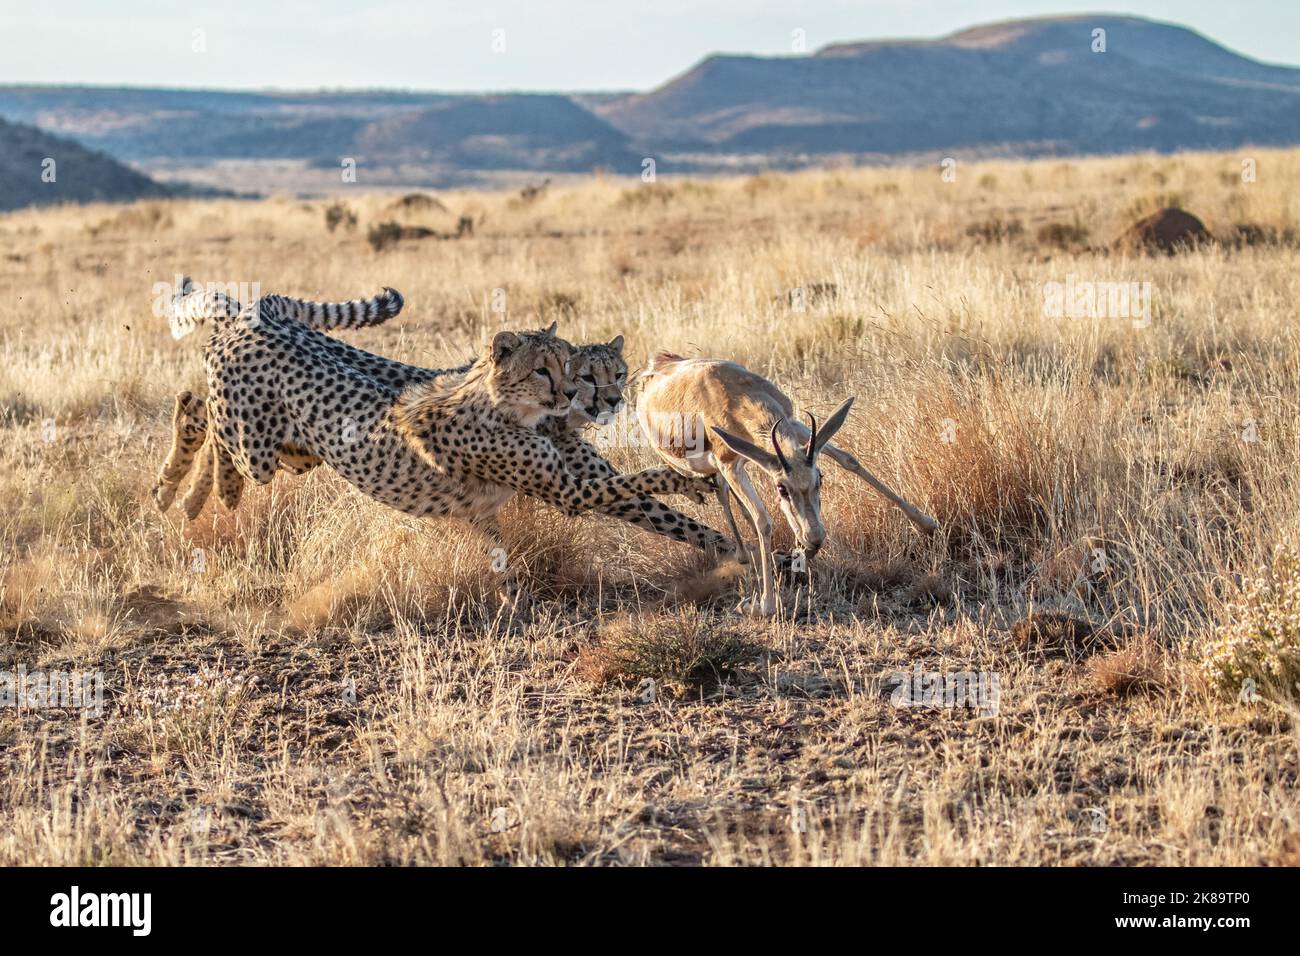 Cheetahs hunting a springbok, photo taken a safari in South Africa Stock Photo